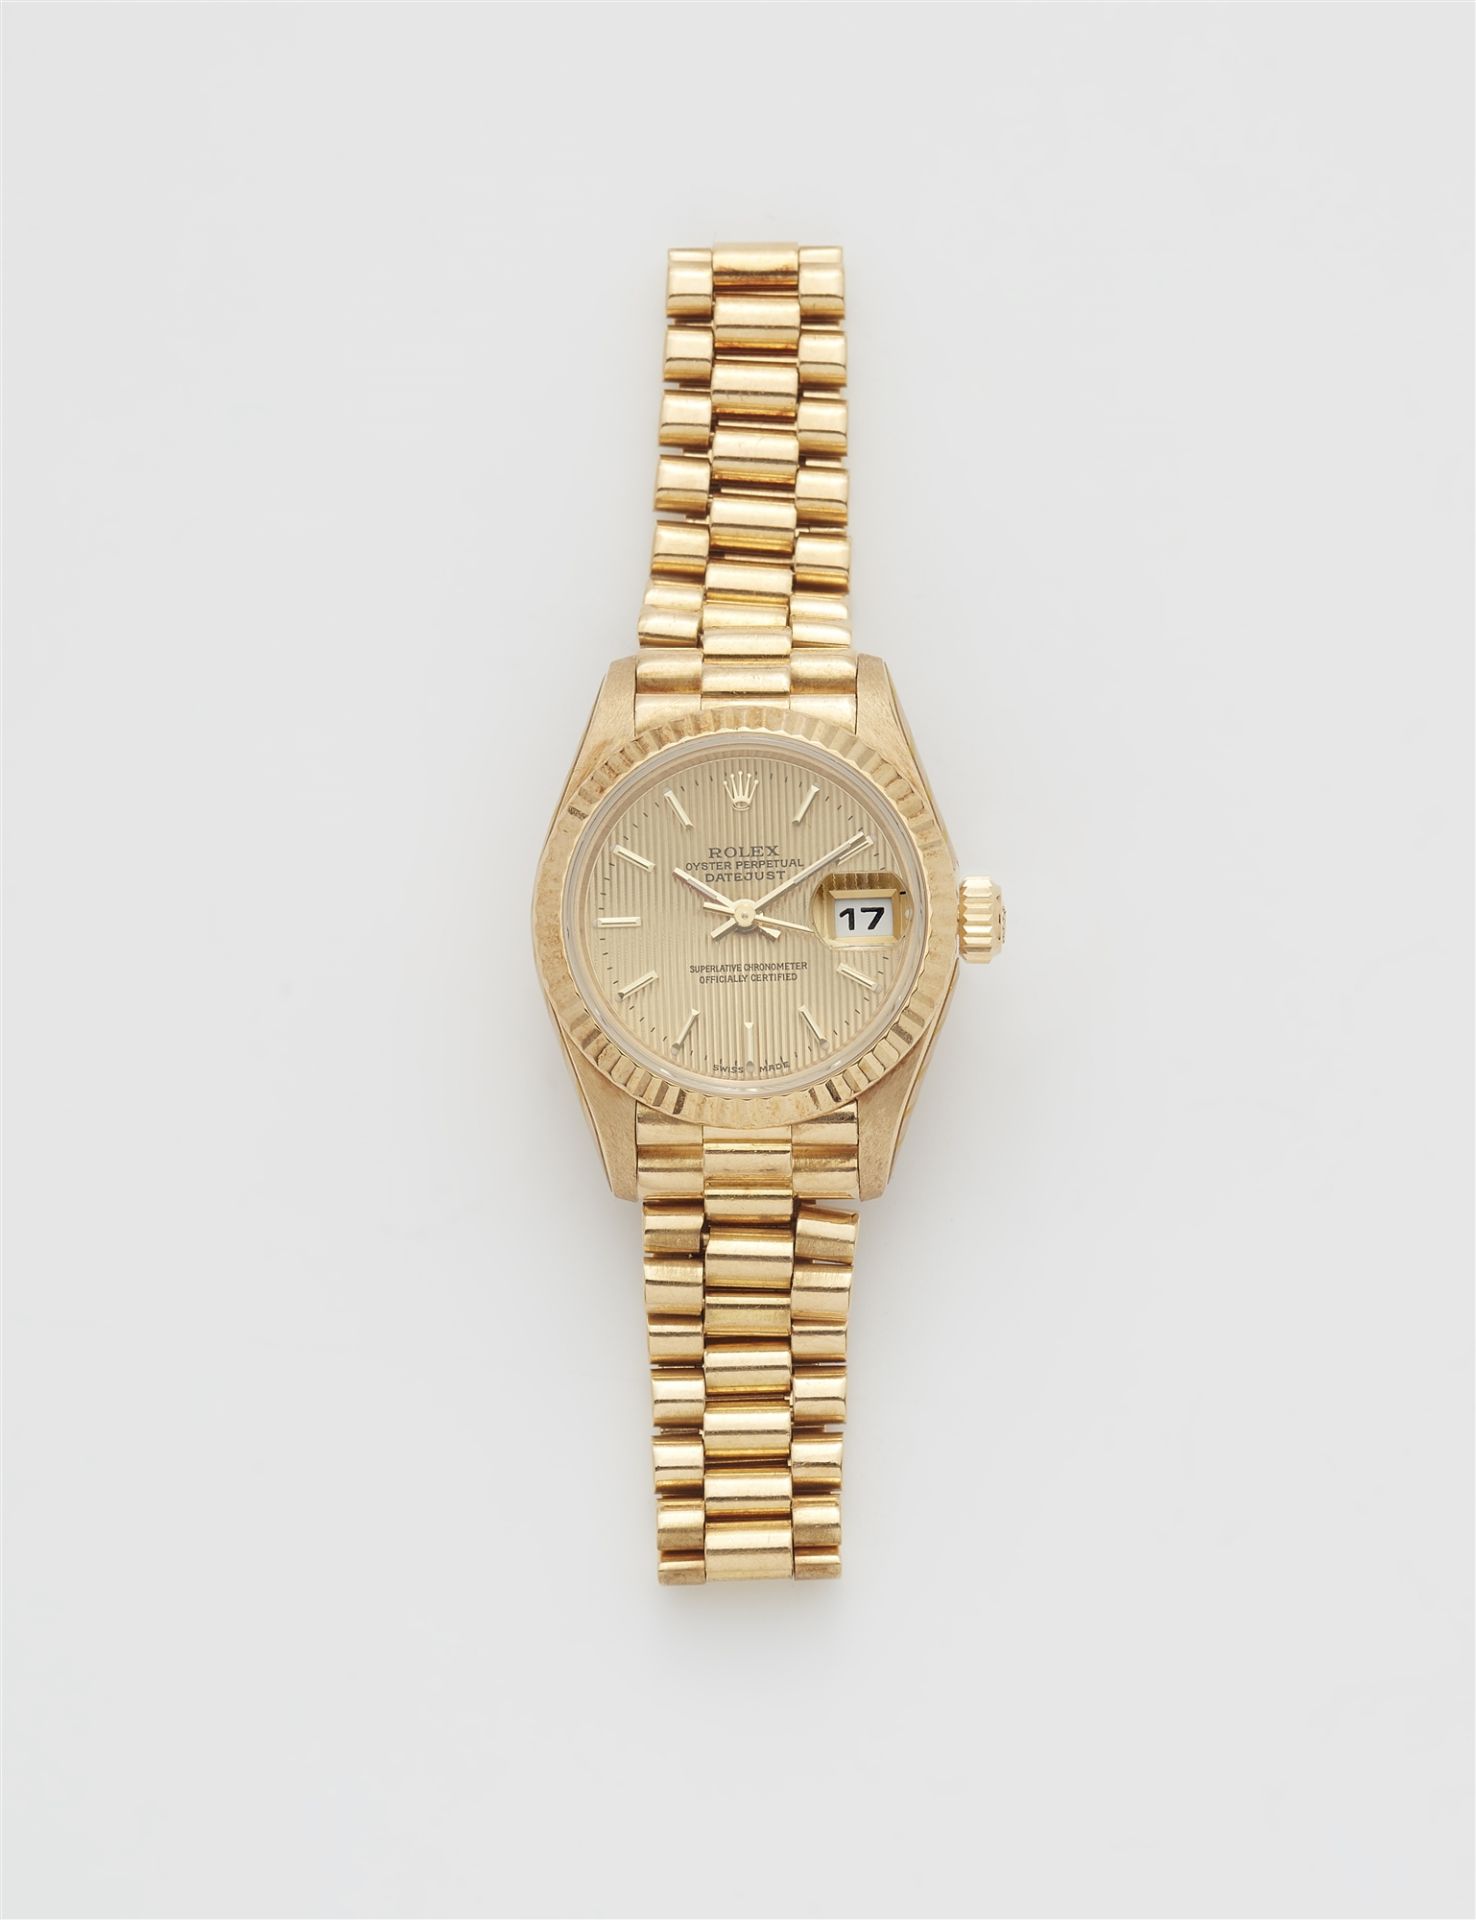 An 18k yellow gold automatic Rolex Ladies Datejust wristwatch.